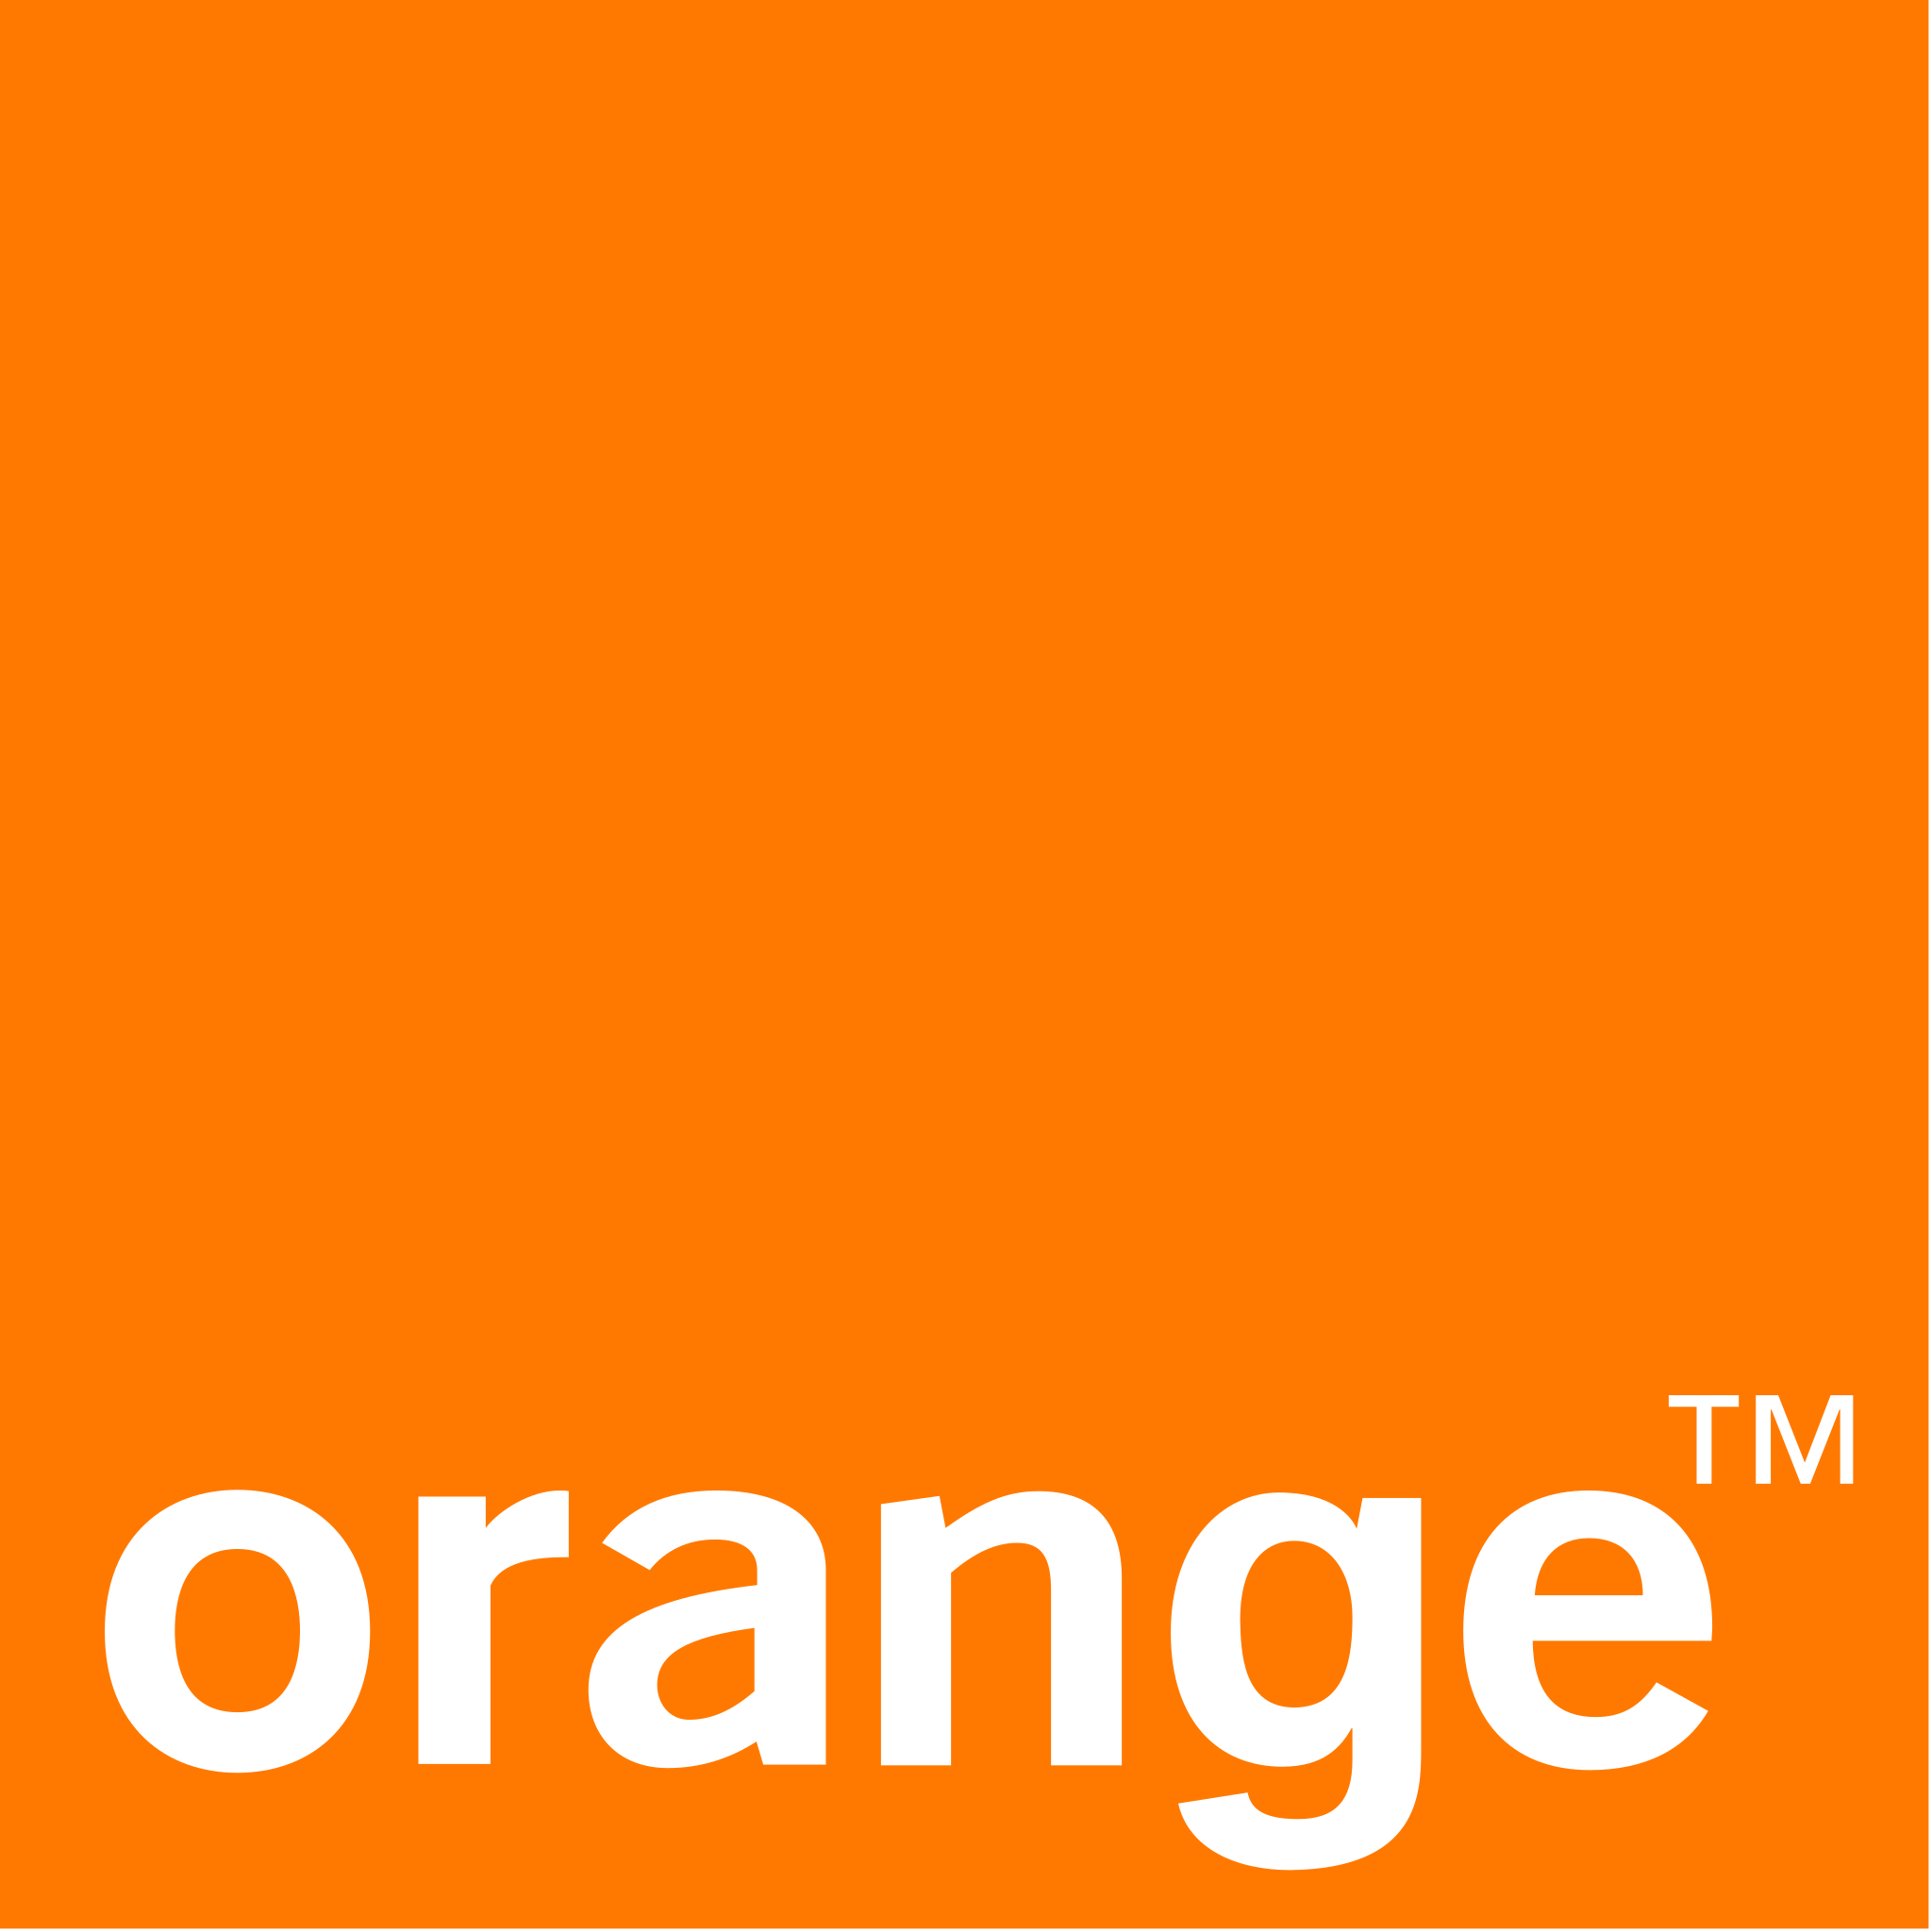 Le logo de ORANGE 